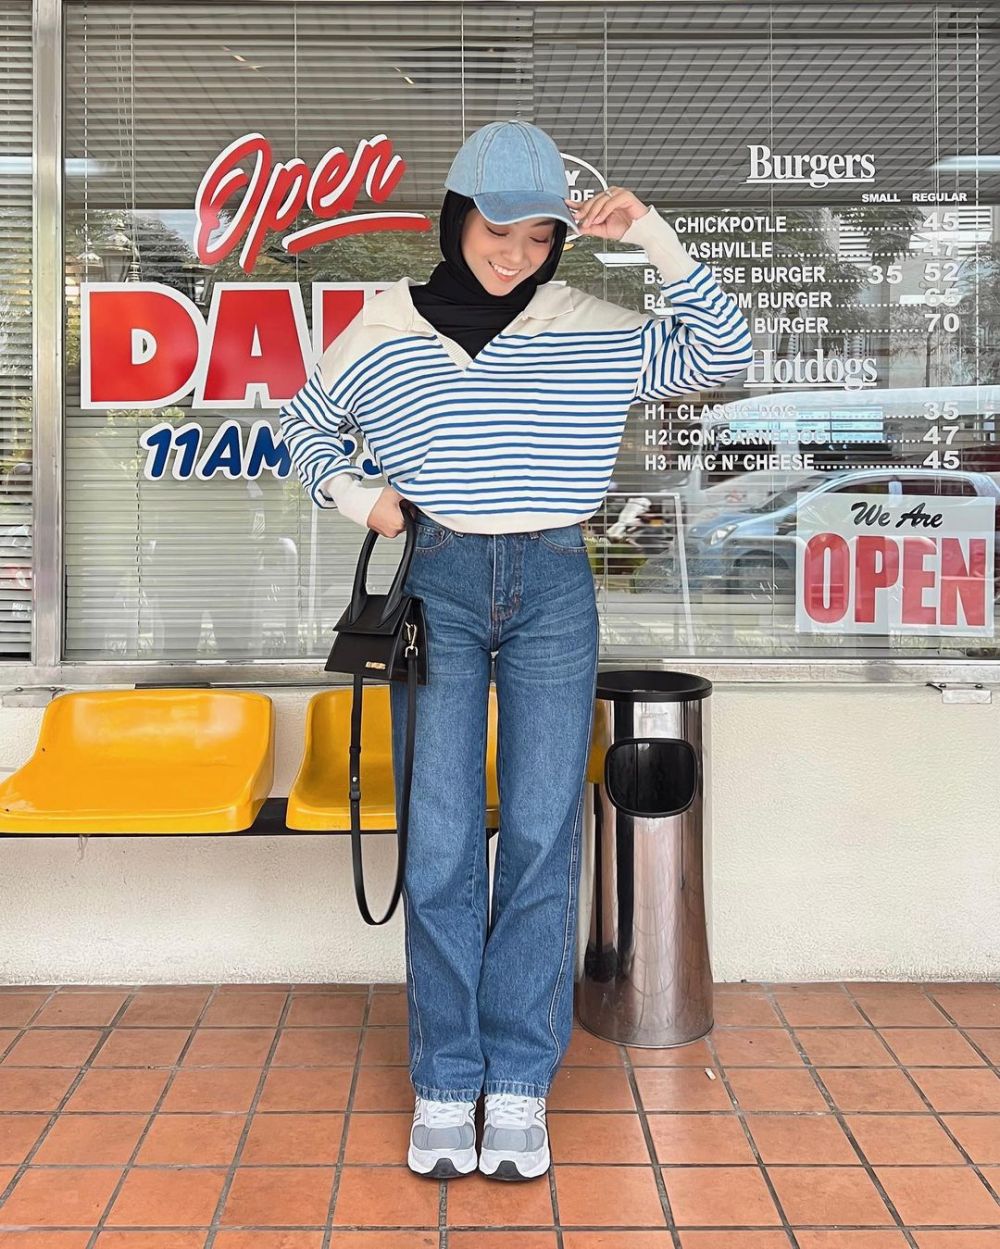 9 Outfit Bukber dengan Celana Jeans ala Meirani Amalia Putri